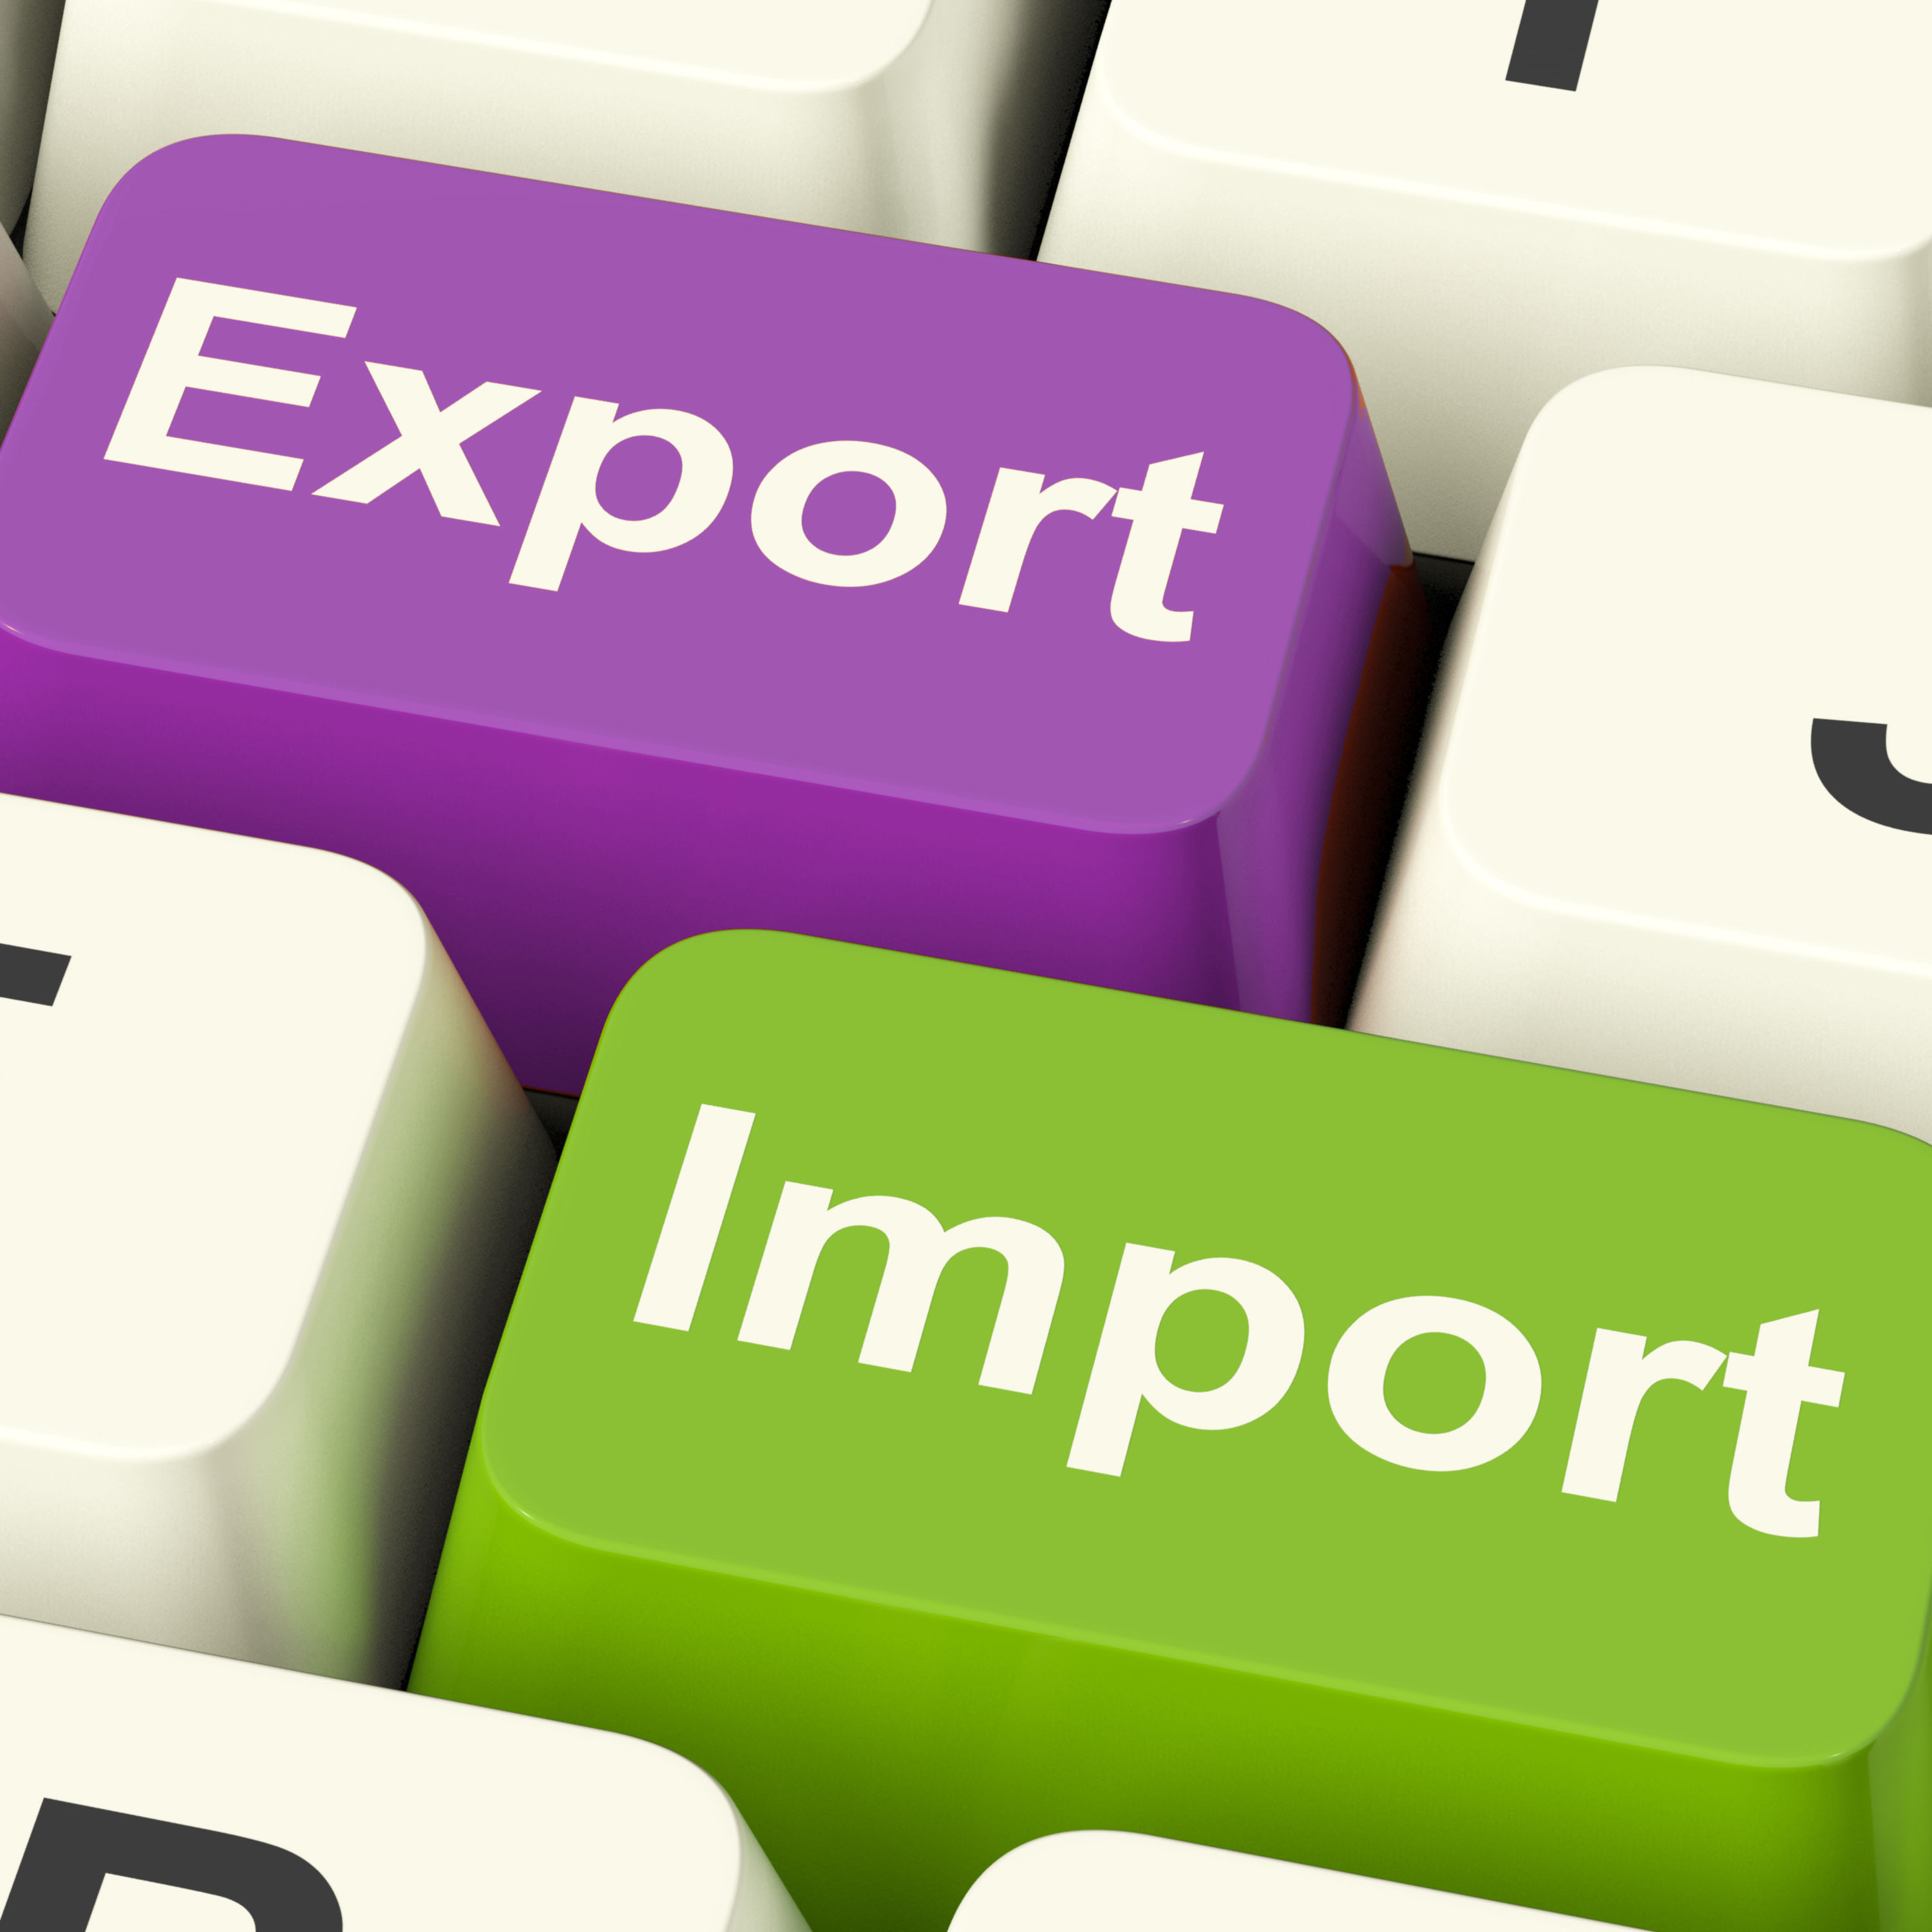 Export promotion portal proves effectiveness